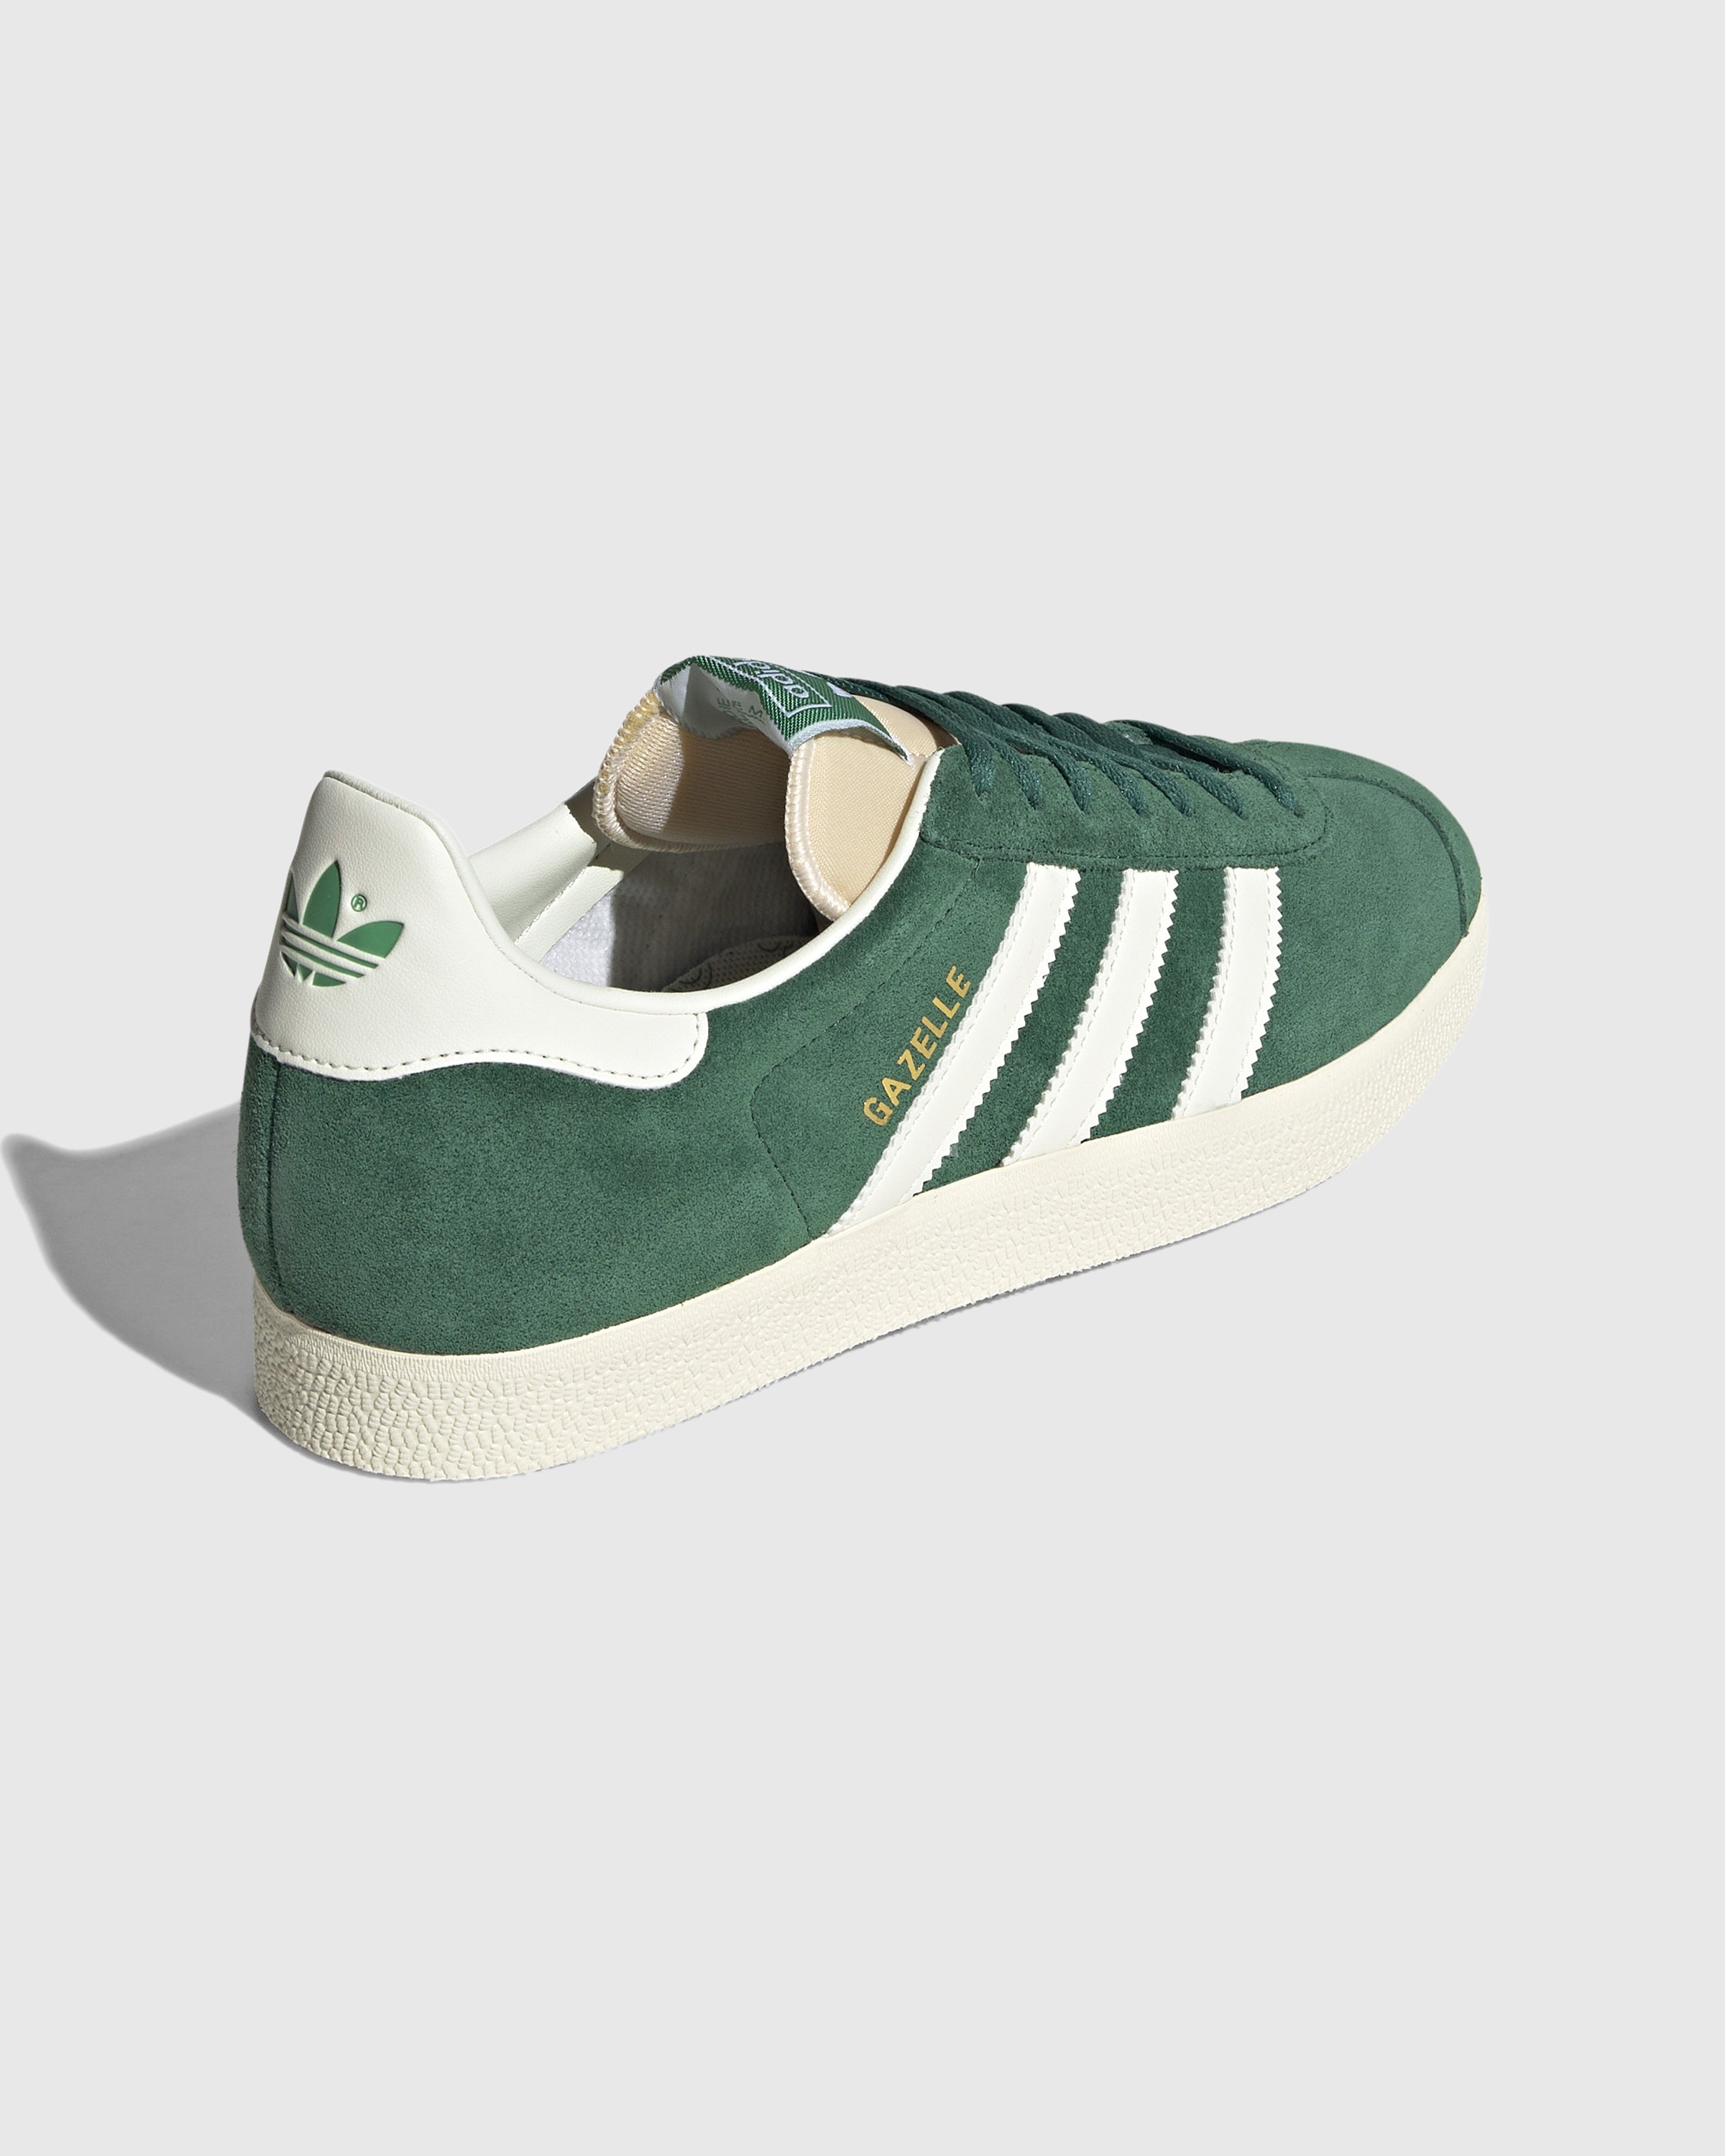 Adidas - Gazelle Green/White - Footwear - Green - Image 4